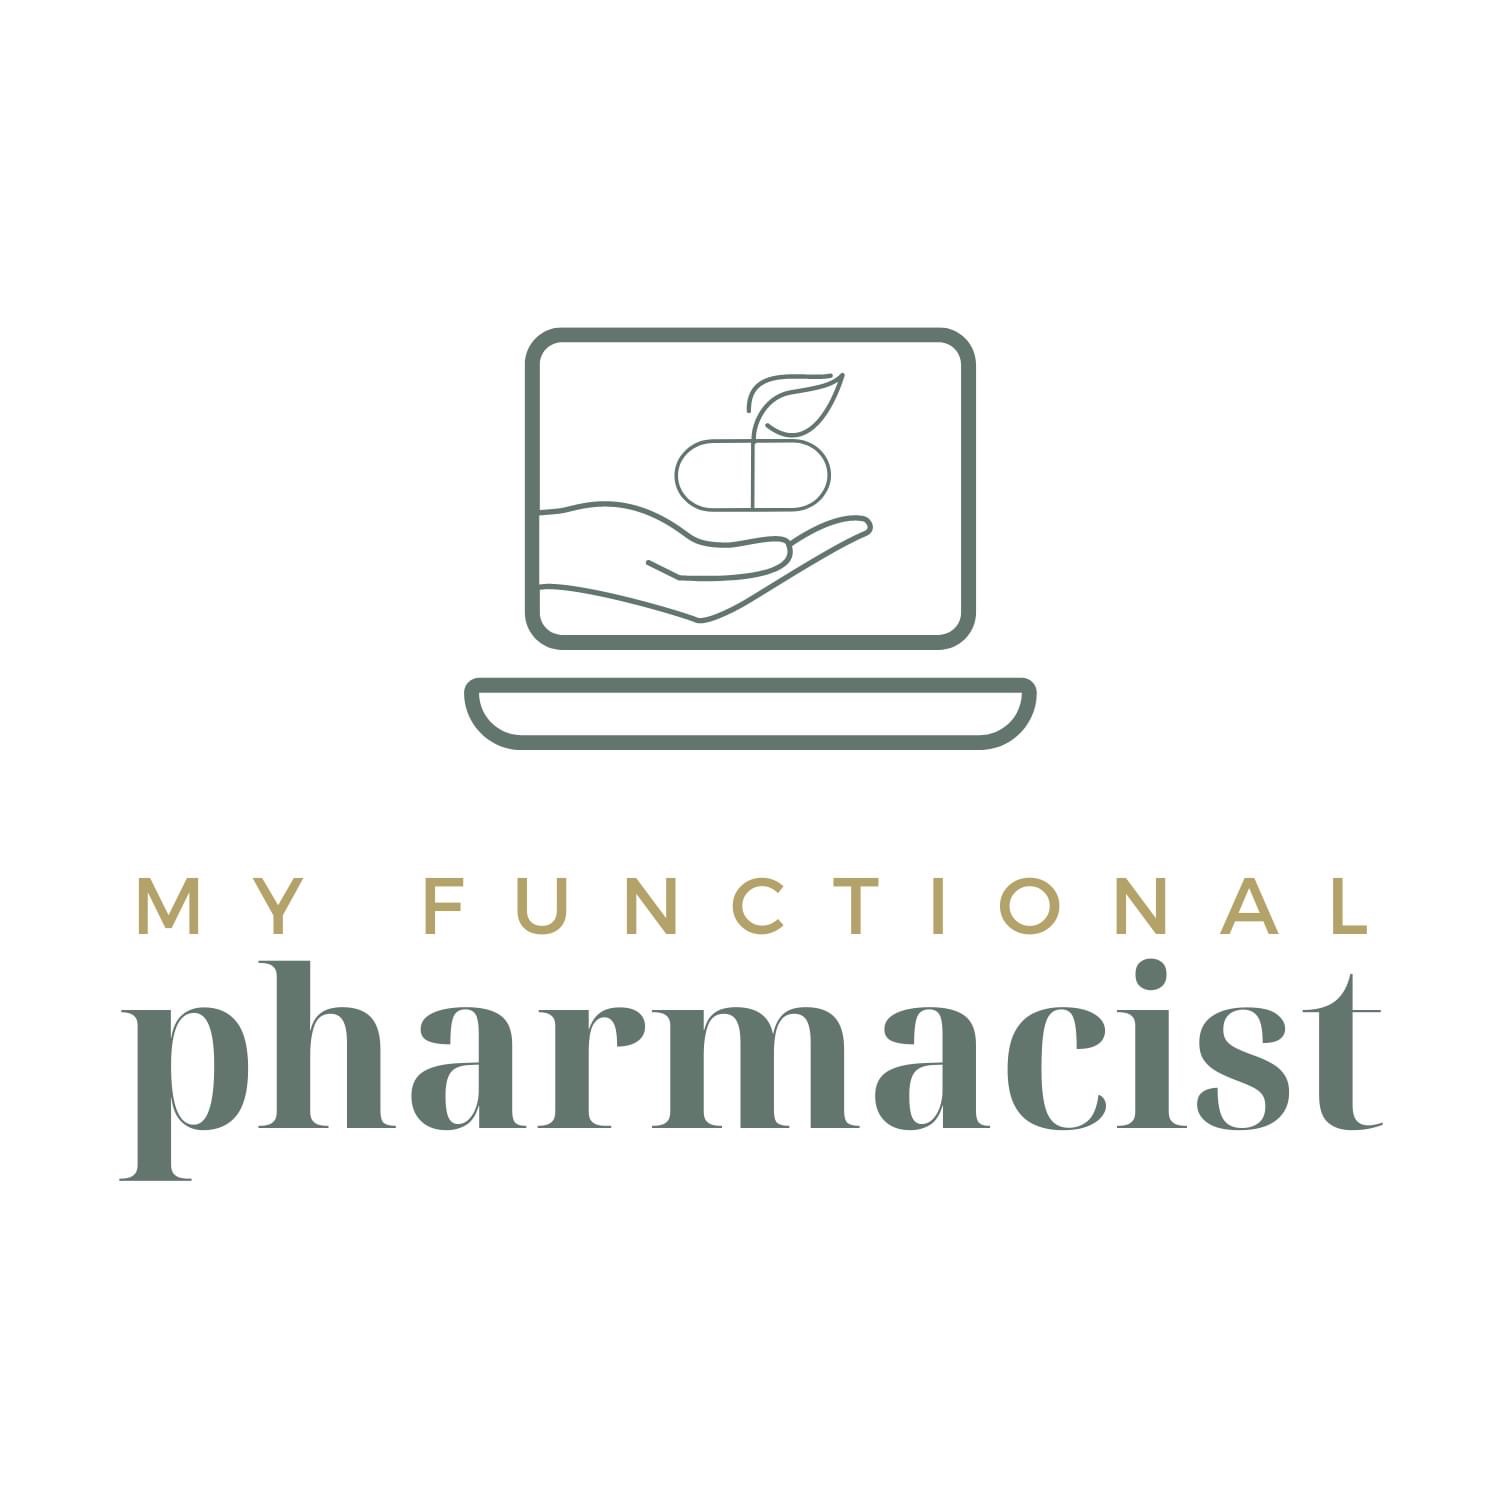 My Functional Pharmacist